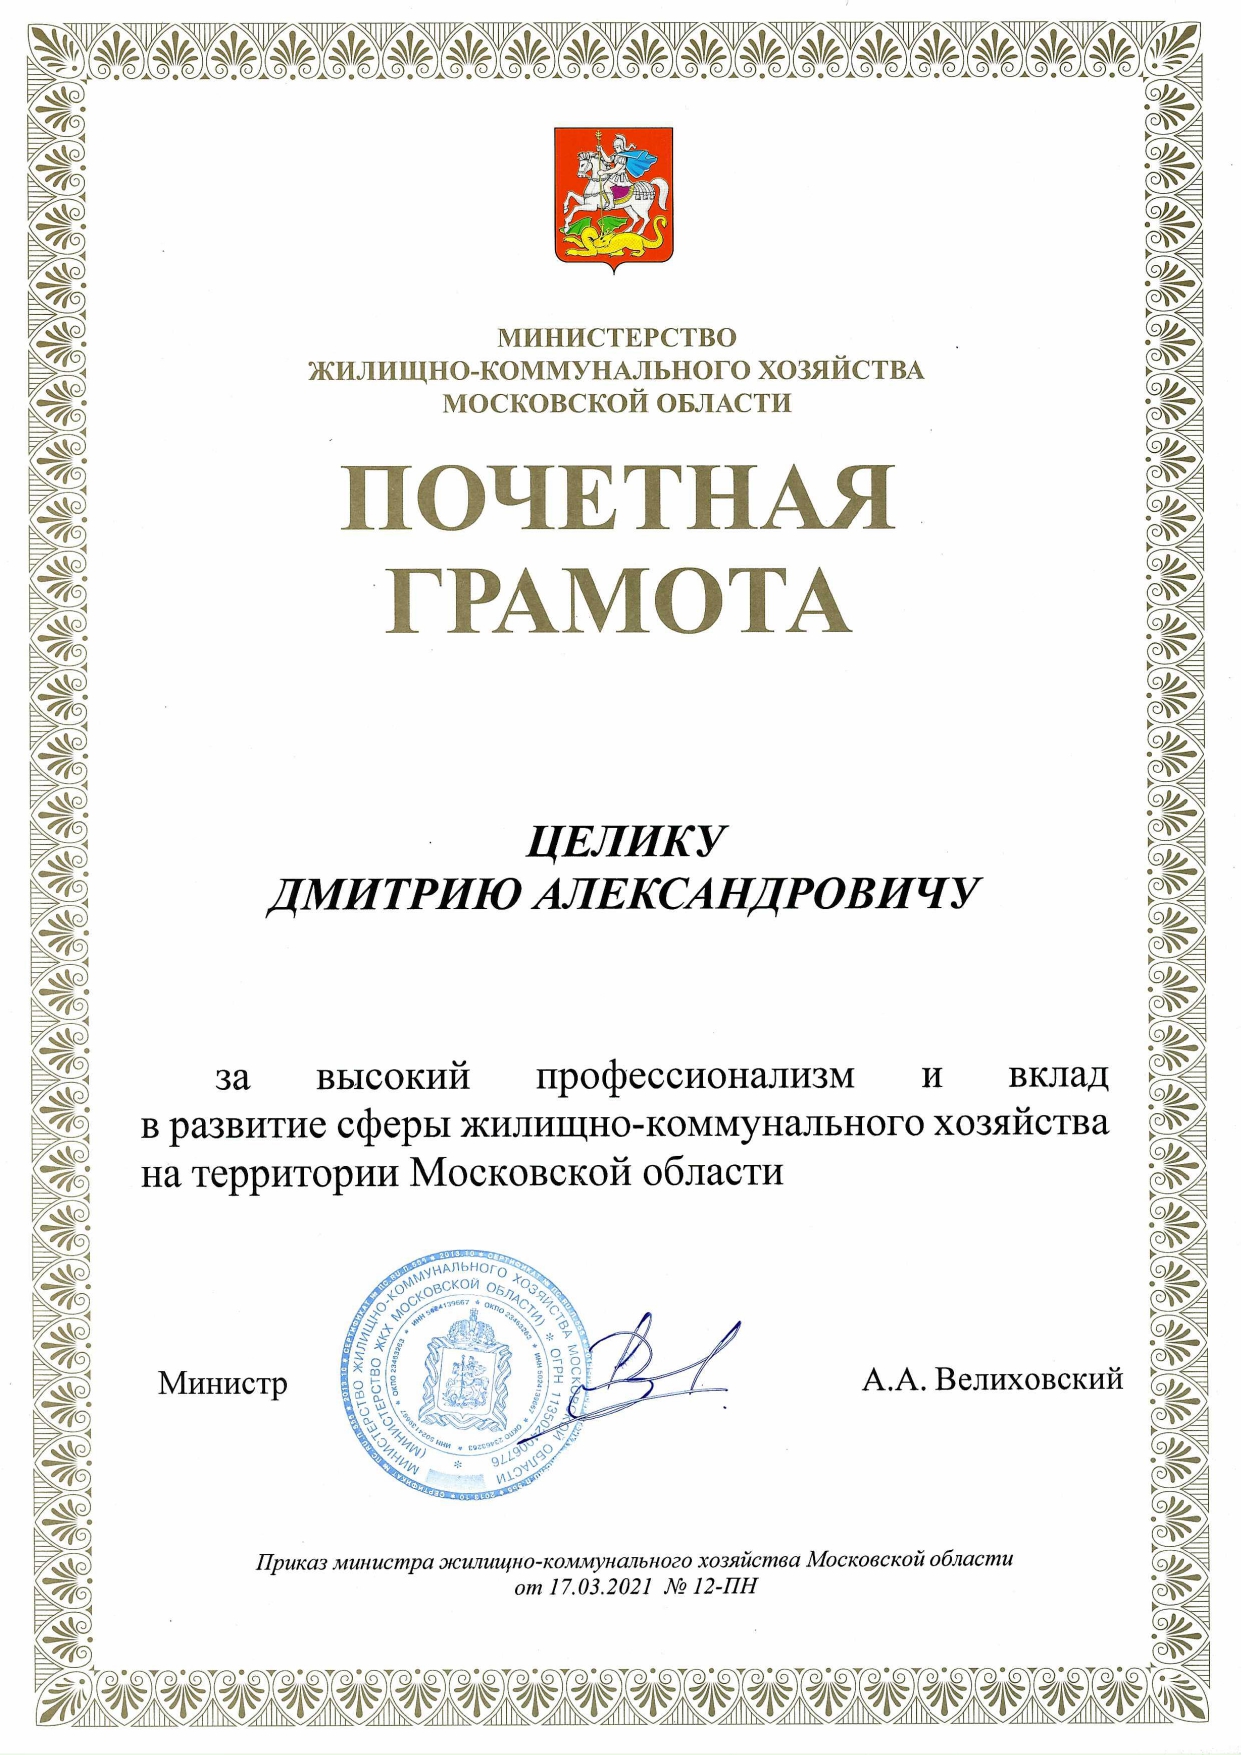 Почетная грамота от Министерства ЖКХ Московской области